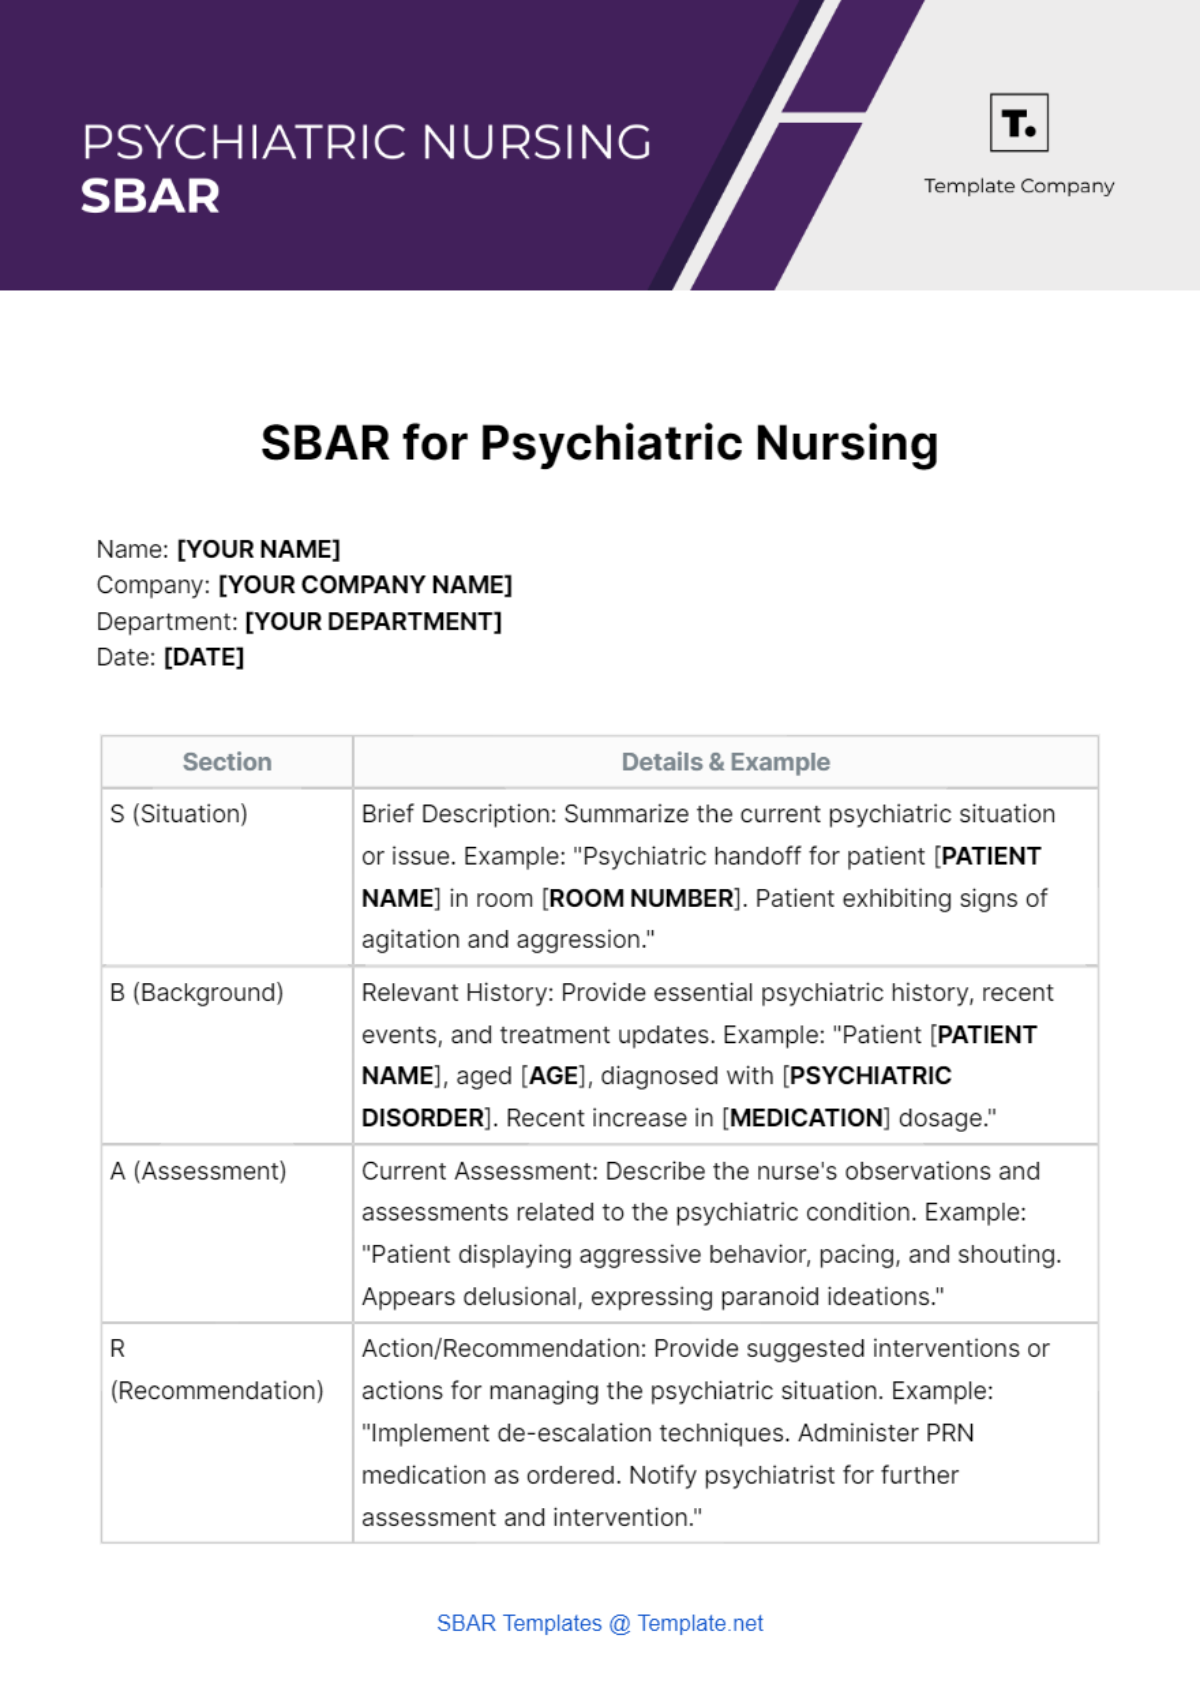 Free SBAR for Psychiatric Nursing Template